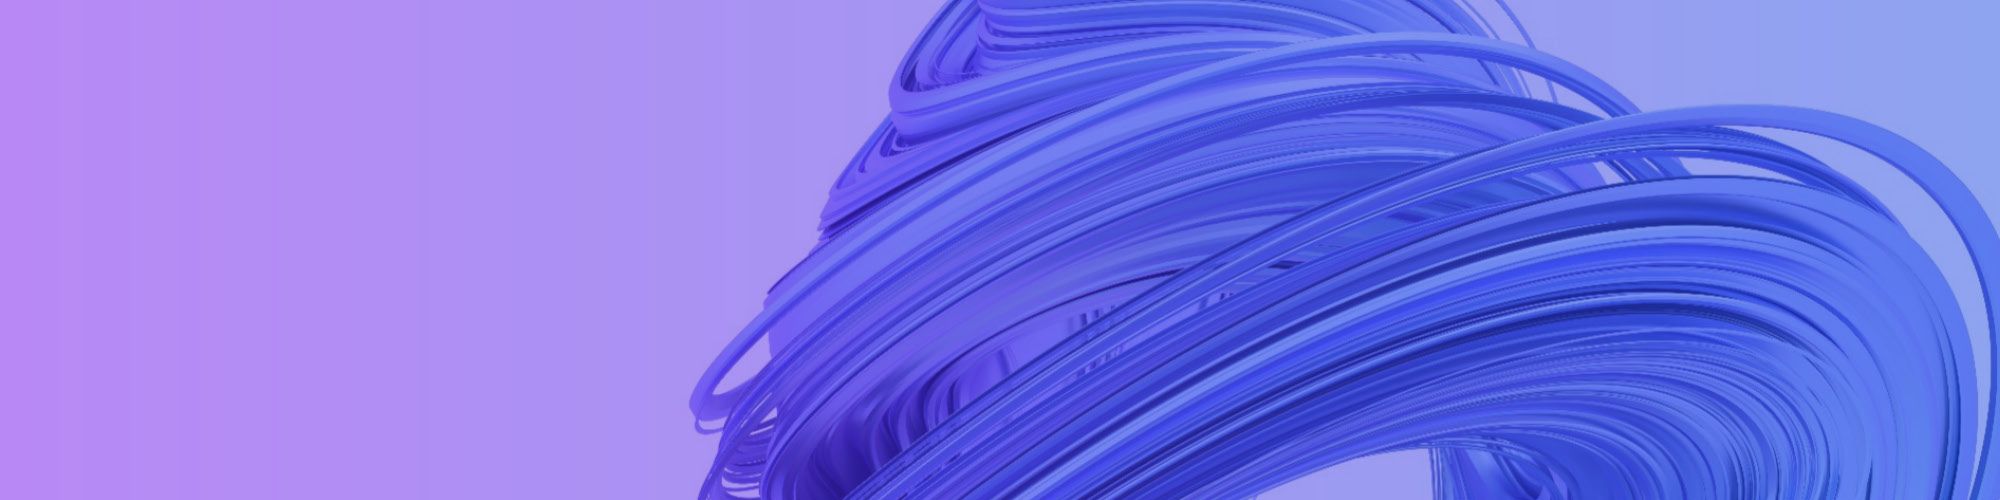 purple graphic swirl on blue background